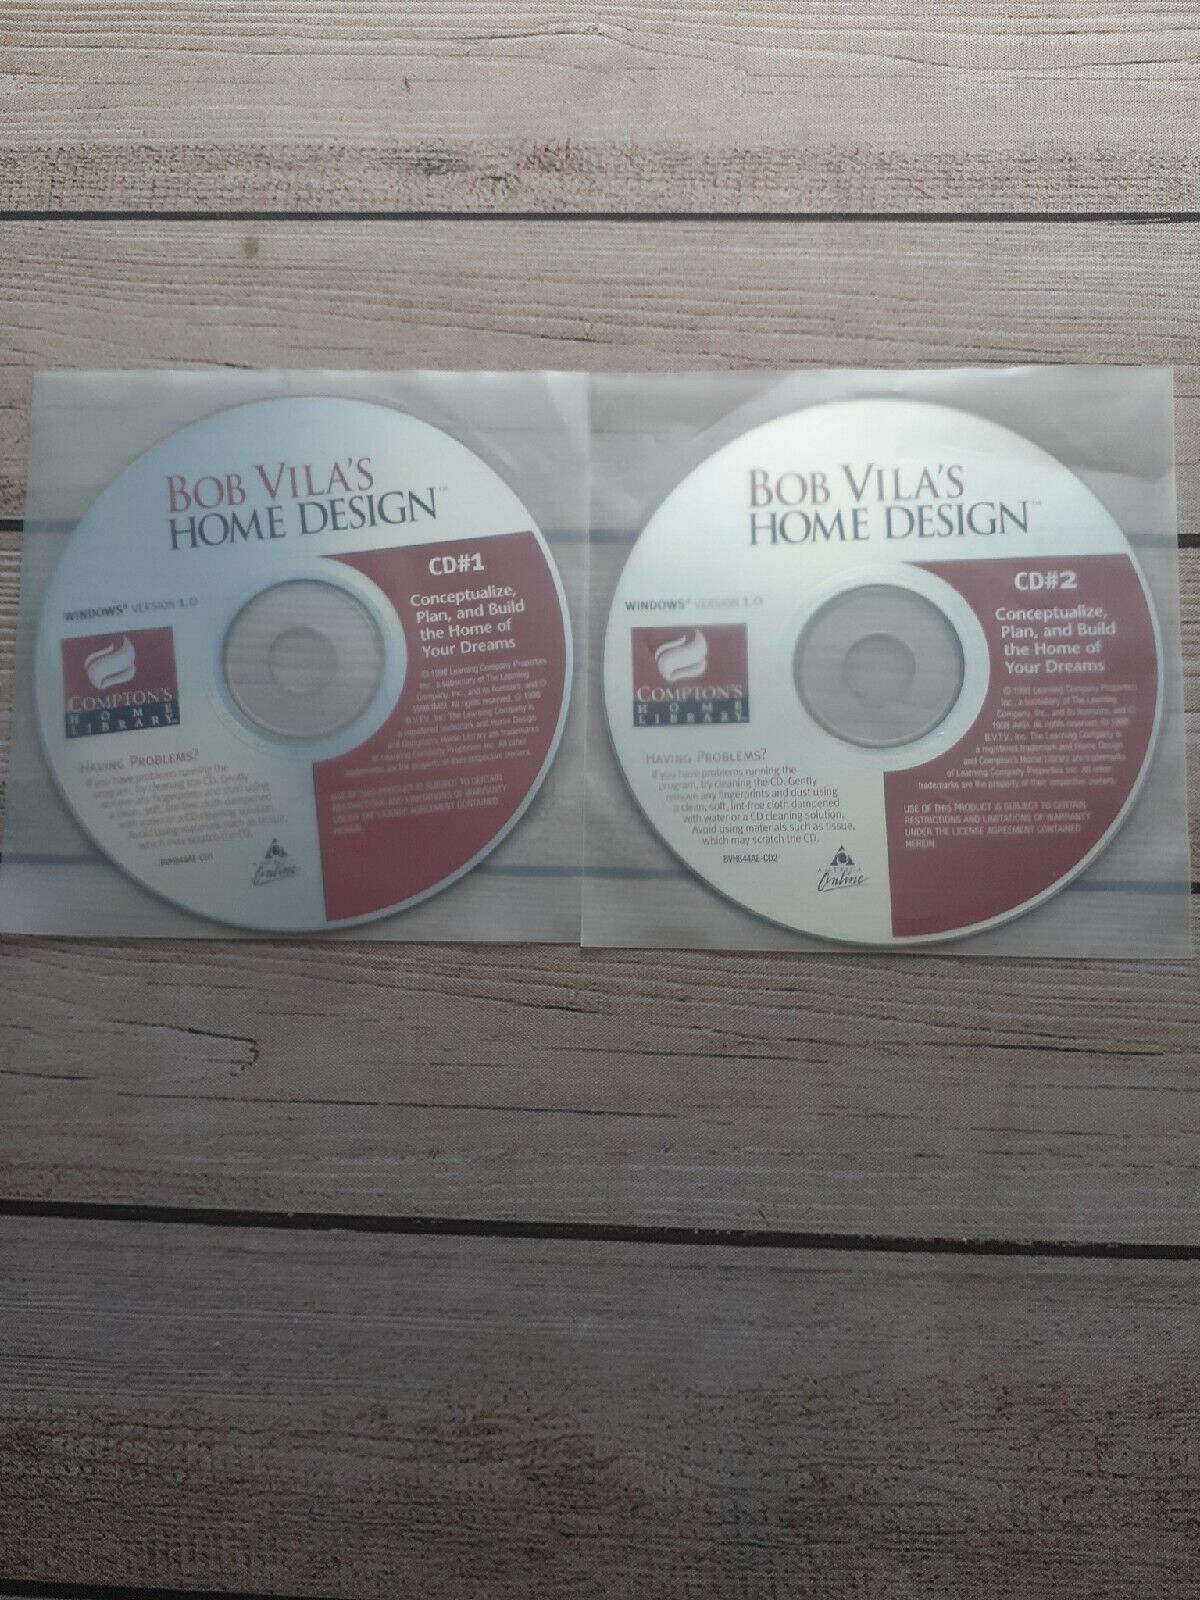 BOB VILA'S HOME DESIGN WINDOWS VERSION 1.0 PC CD 2 DISC COMPTON HOME LIBRARY